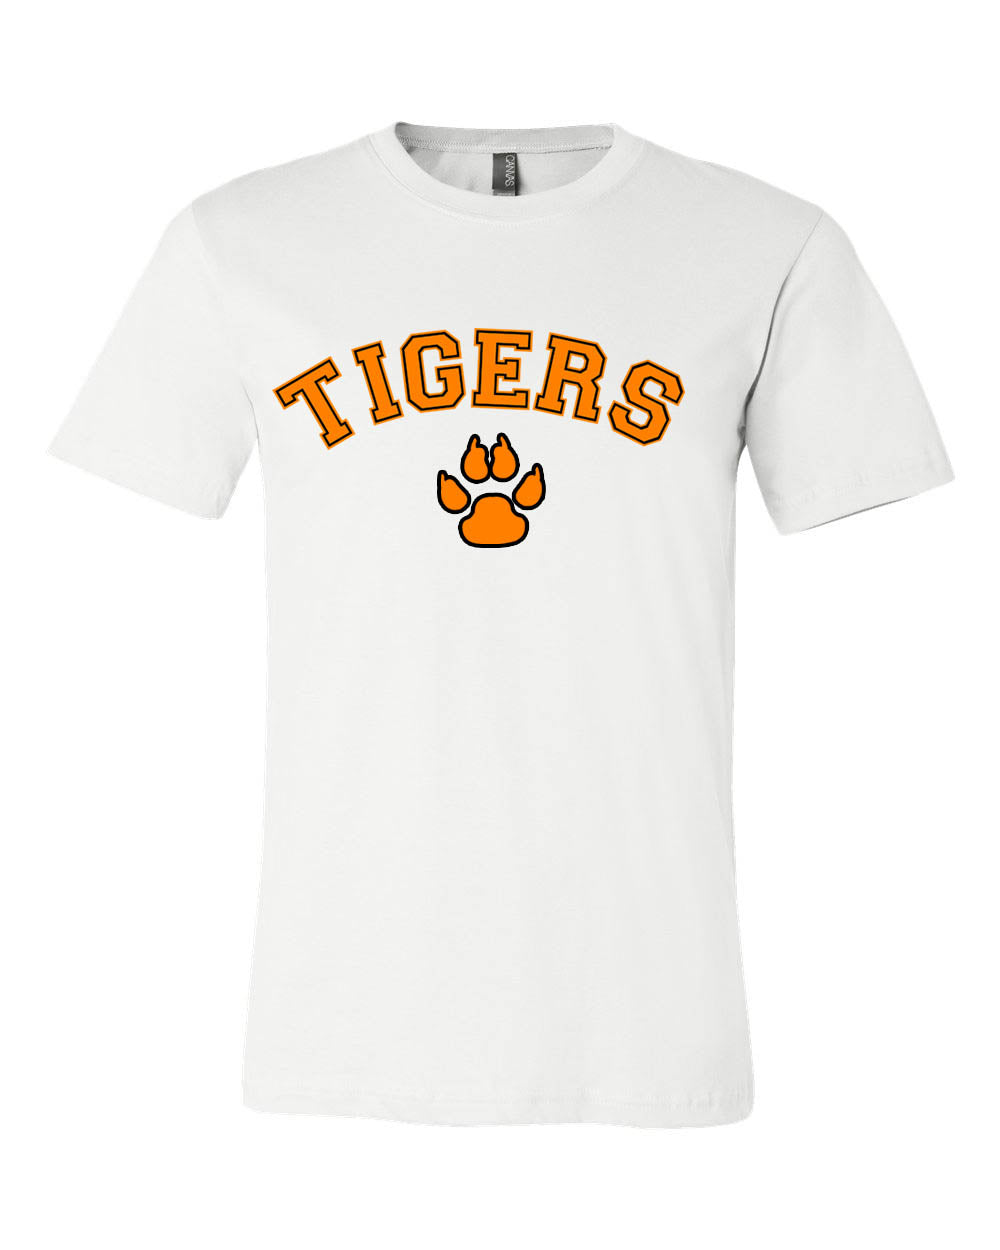 Tigers Design 3 T-Shirt